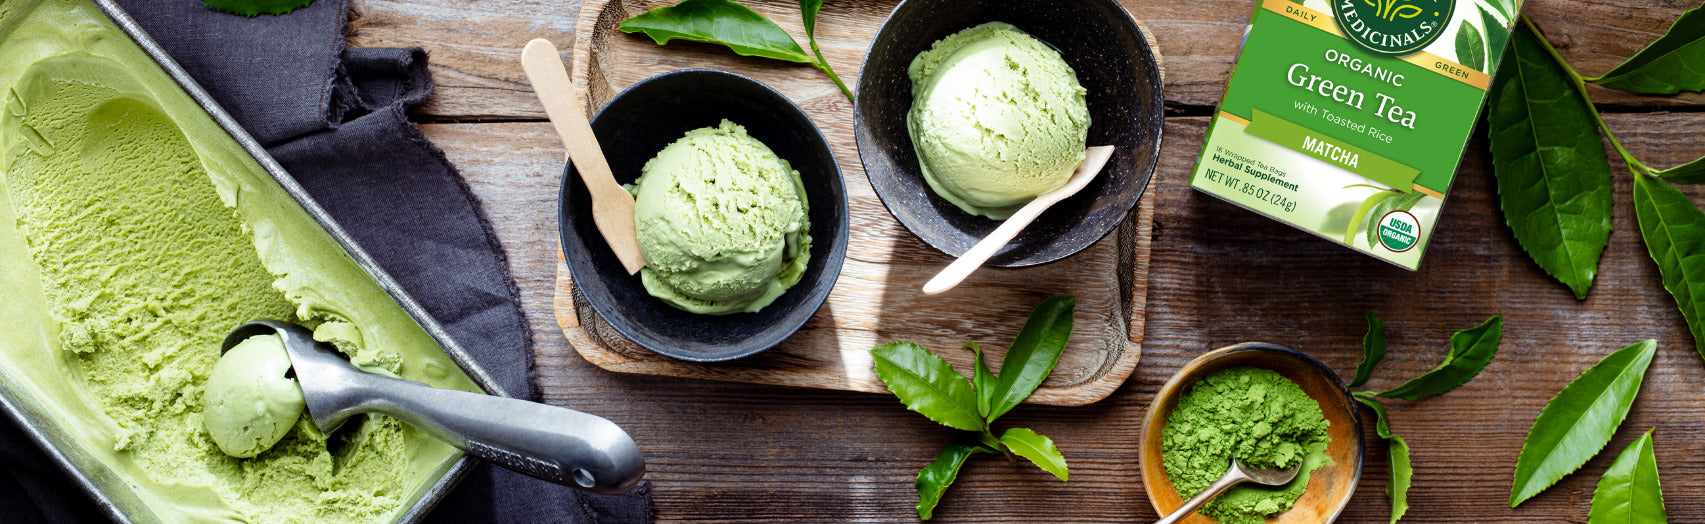 Vegan Green Tea Matcha Ice Cream